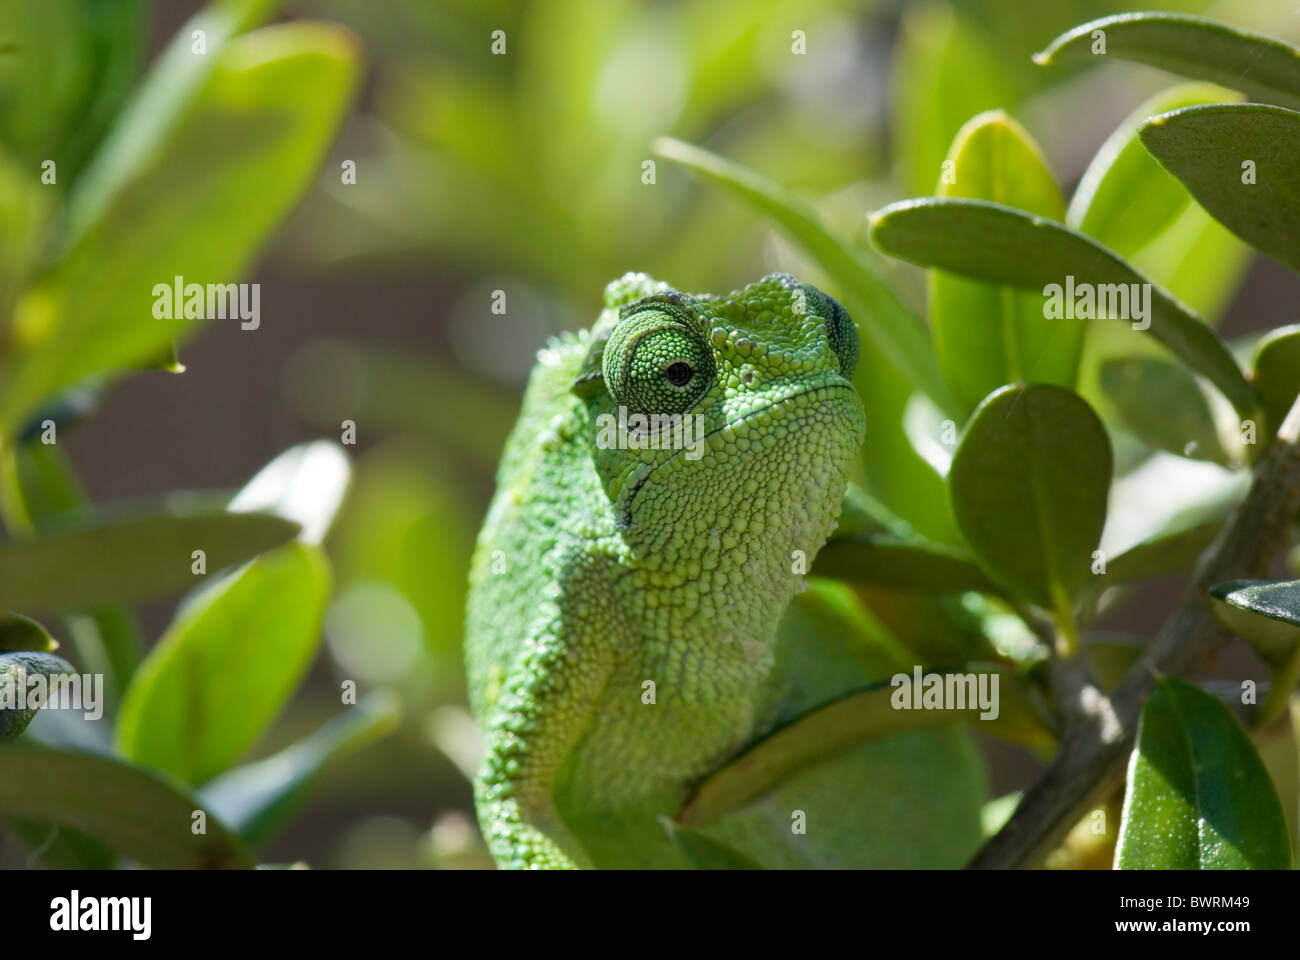 Green chameleon camouflaged against green leaves Stock Photo